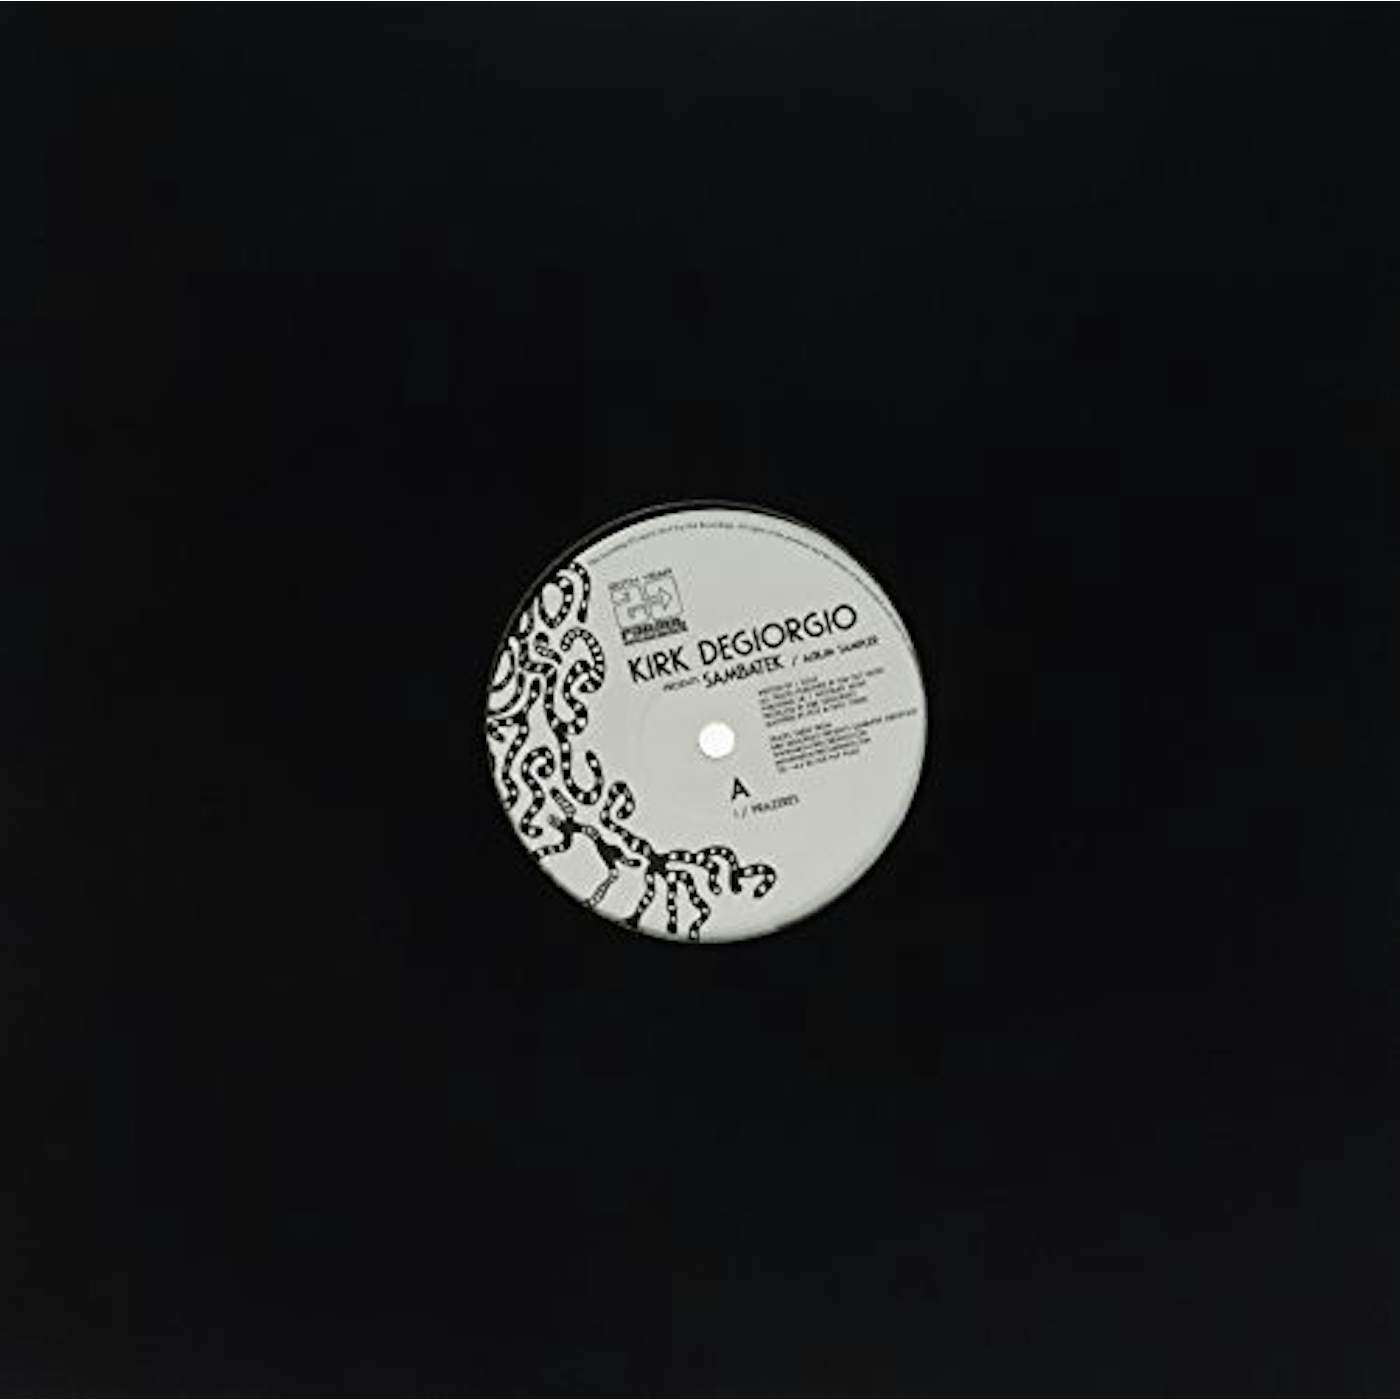 Kirk Degiorgio SAMBATEK-ALBUM SAMPLER Vinyl Record